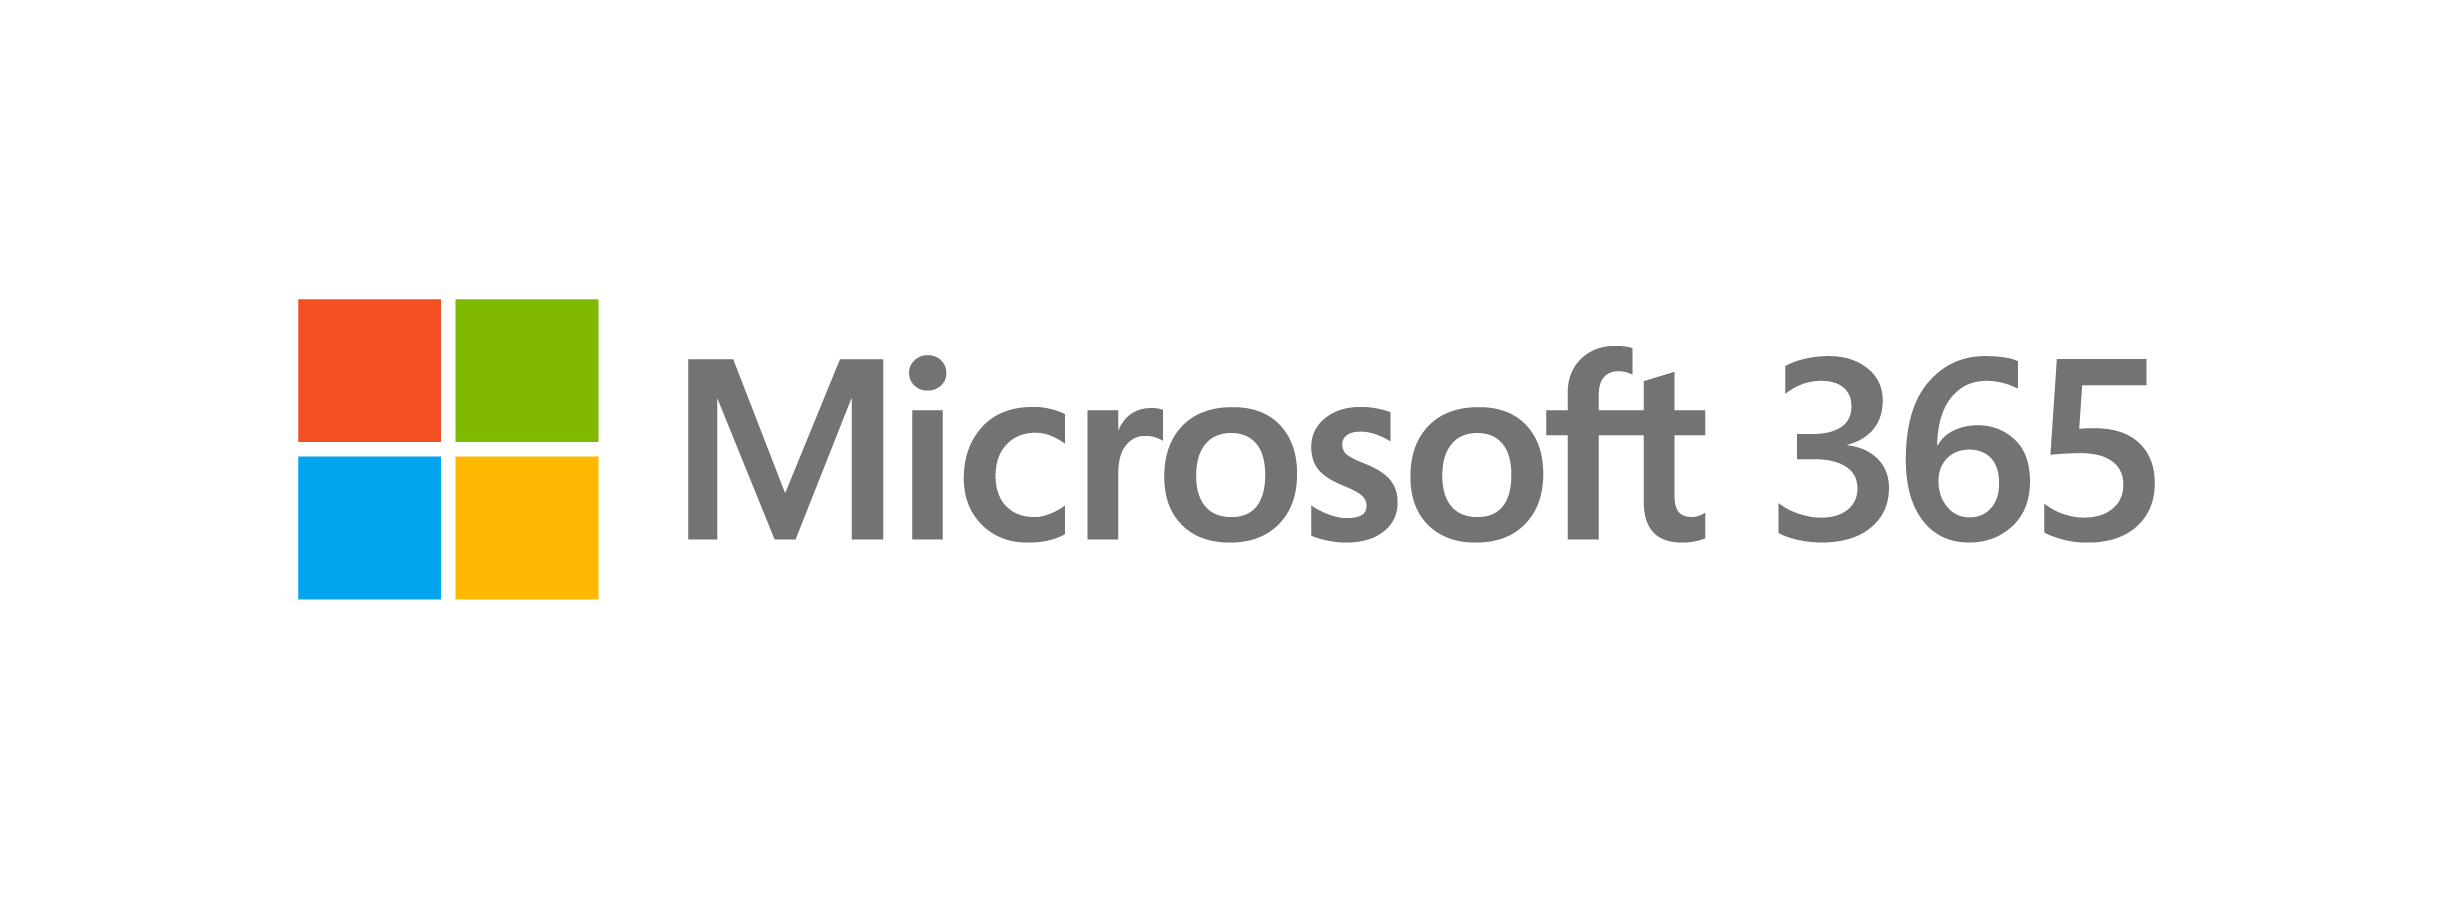 Logotipo de Microsoft 365